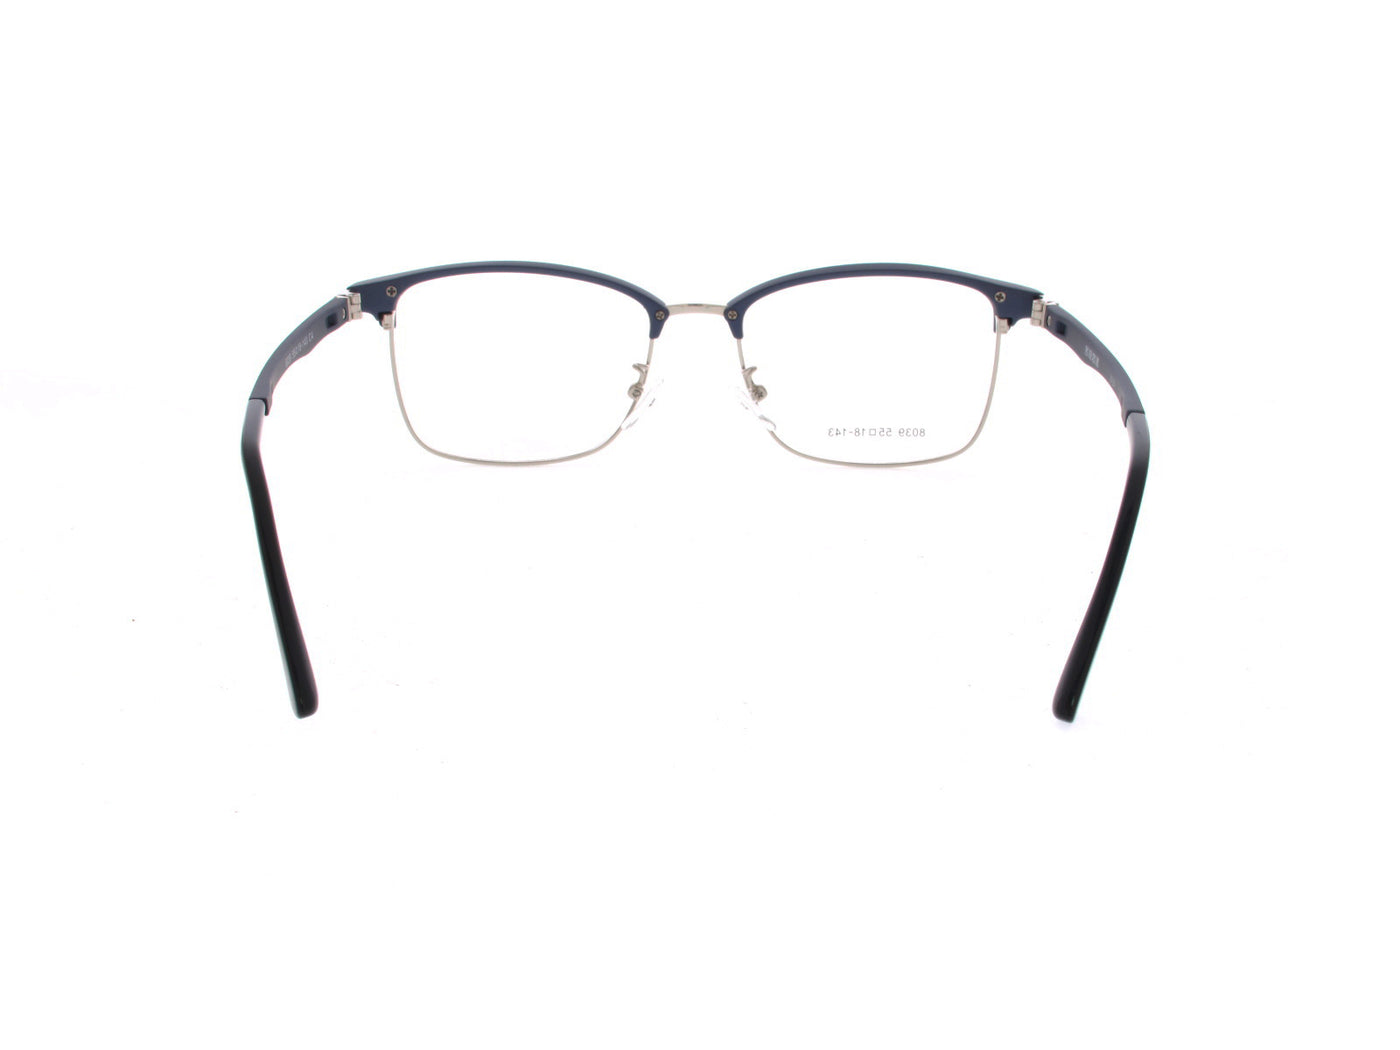 Clip-On Glasses 057352